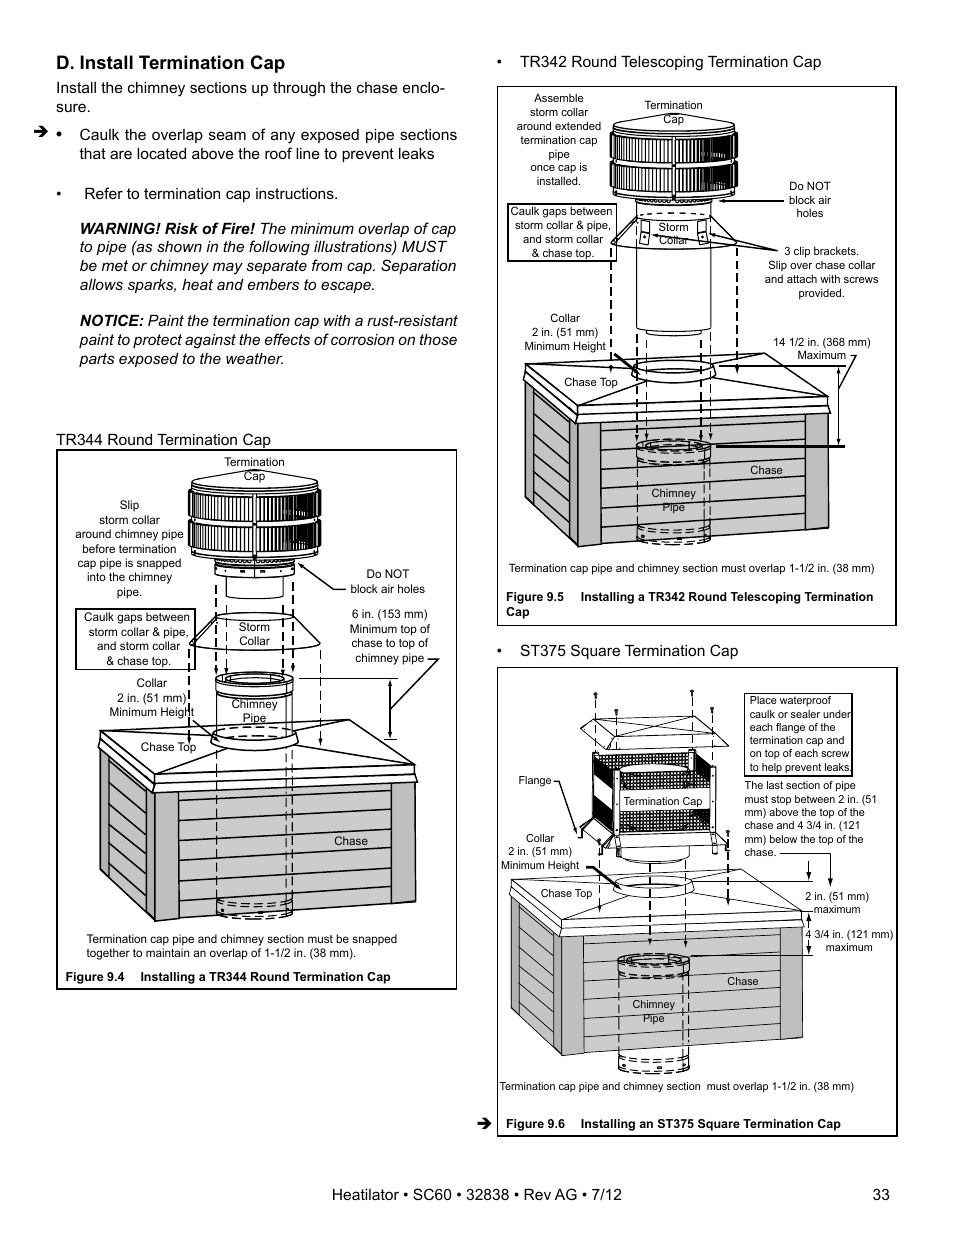 D. install termination cap | Heatiator Heatilator Wood Burning Fireplace SC60 User Manual | Page 33 / 48